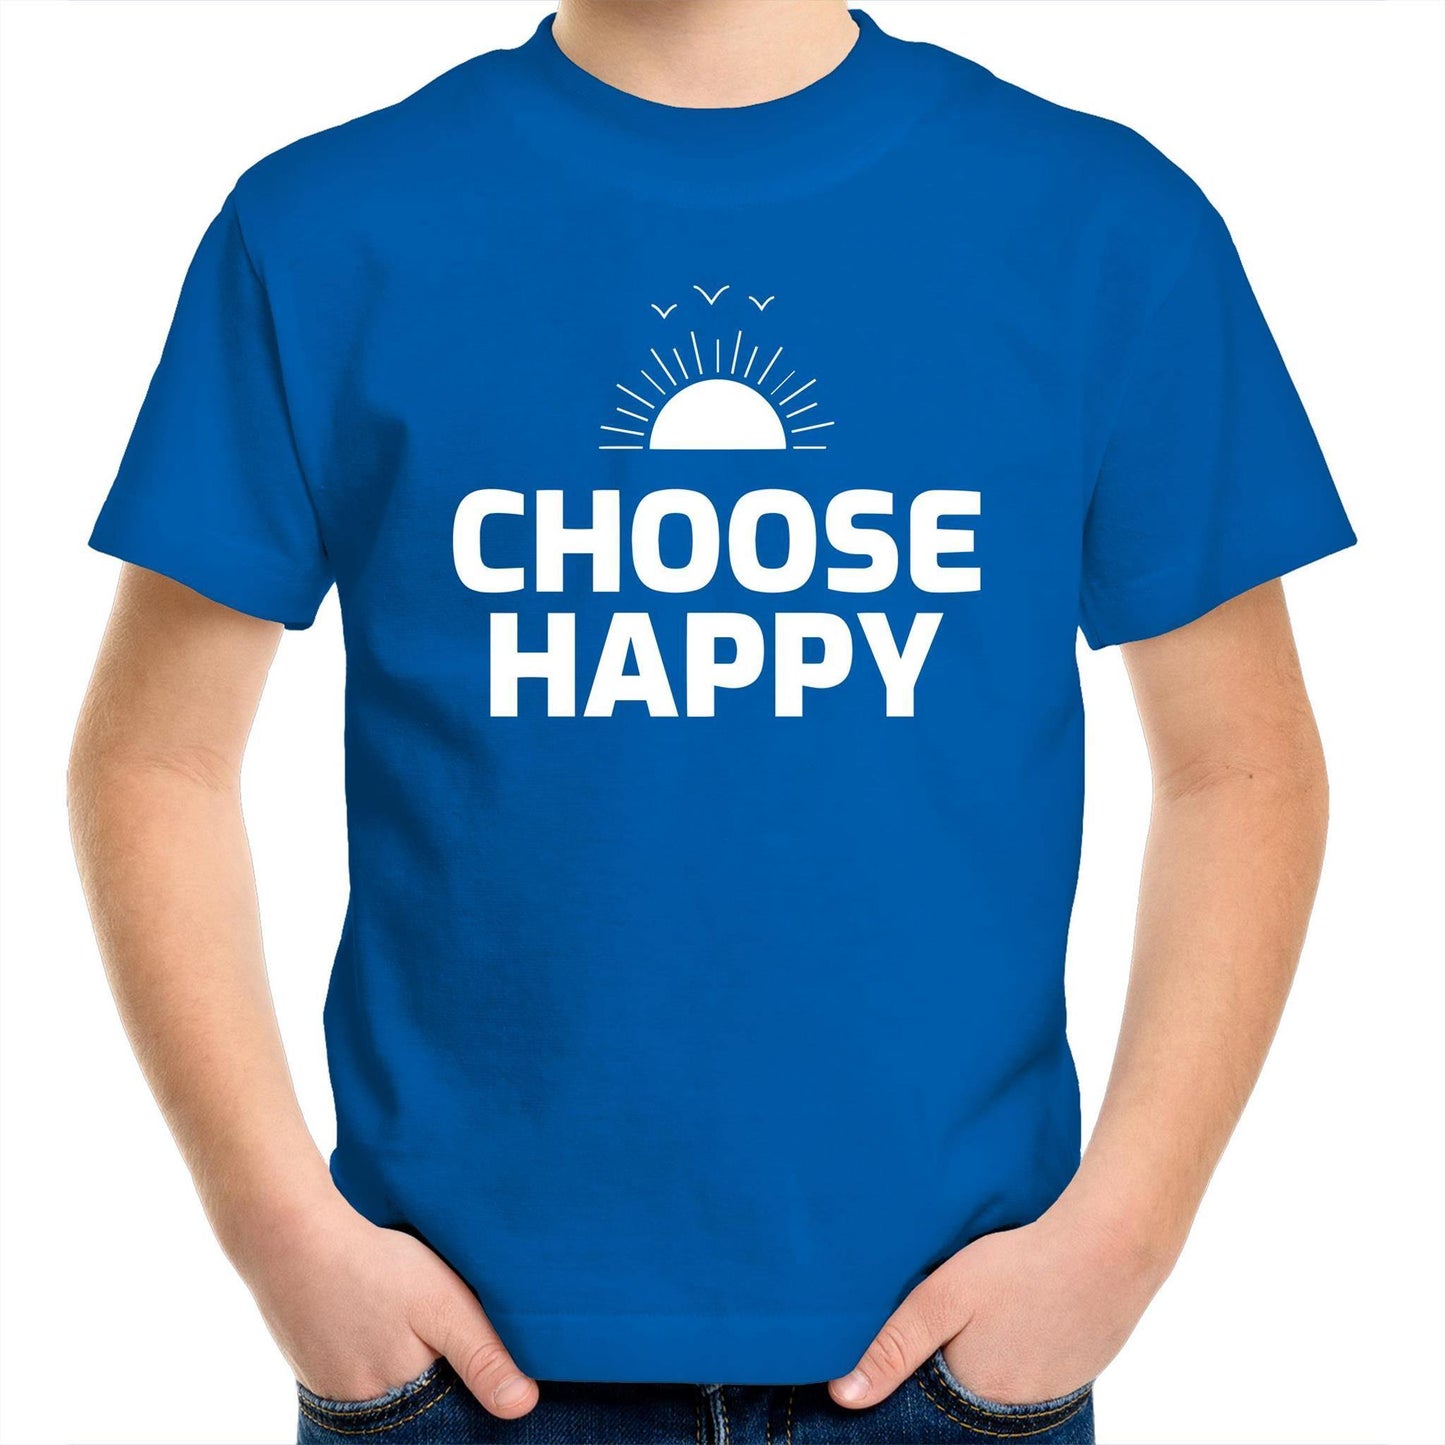 Choose Happy - Kids Youth Crew T-Shirt Bright Royal Kids Youth T-shirt